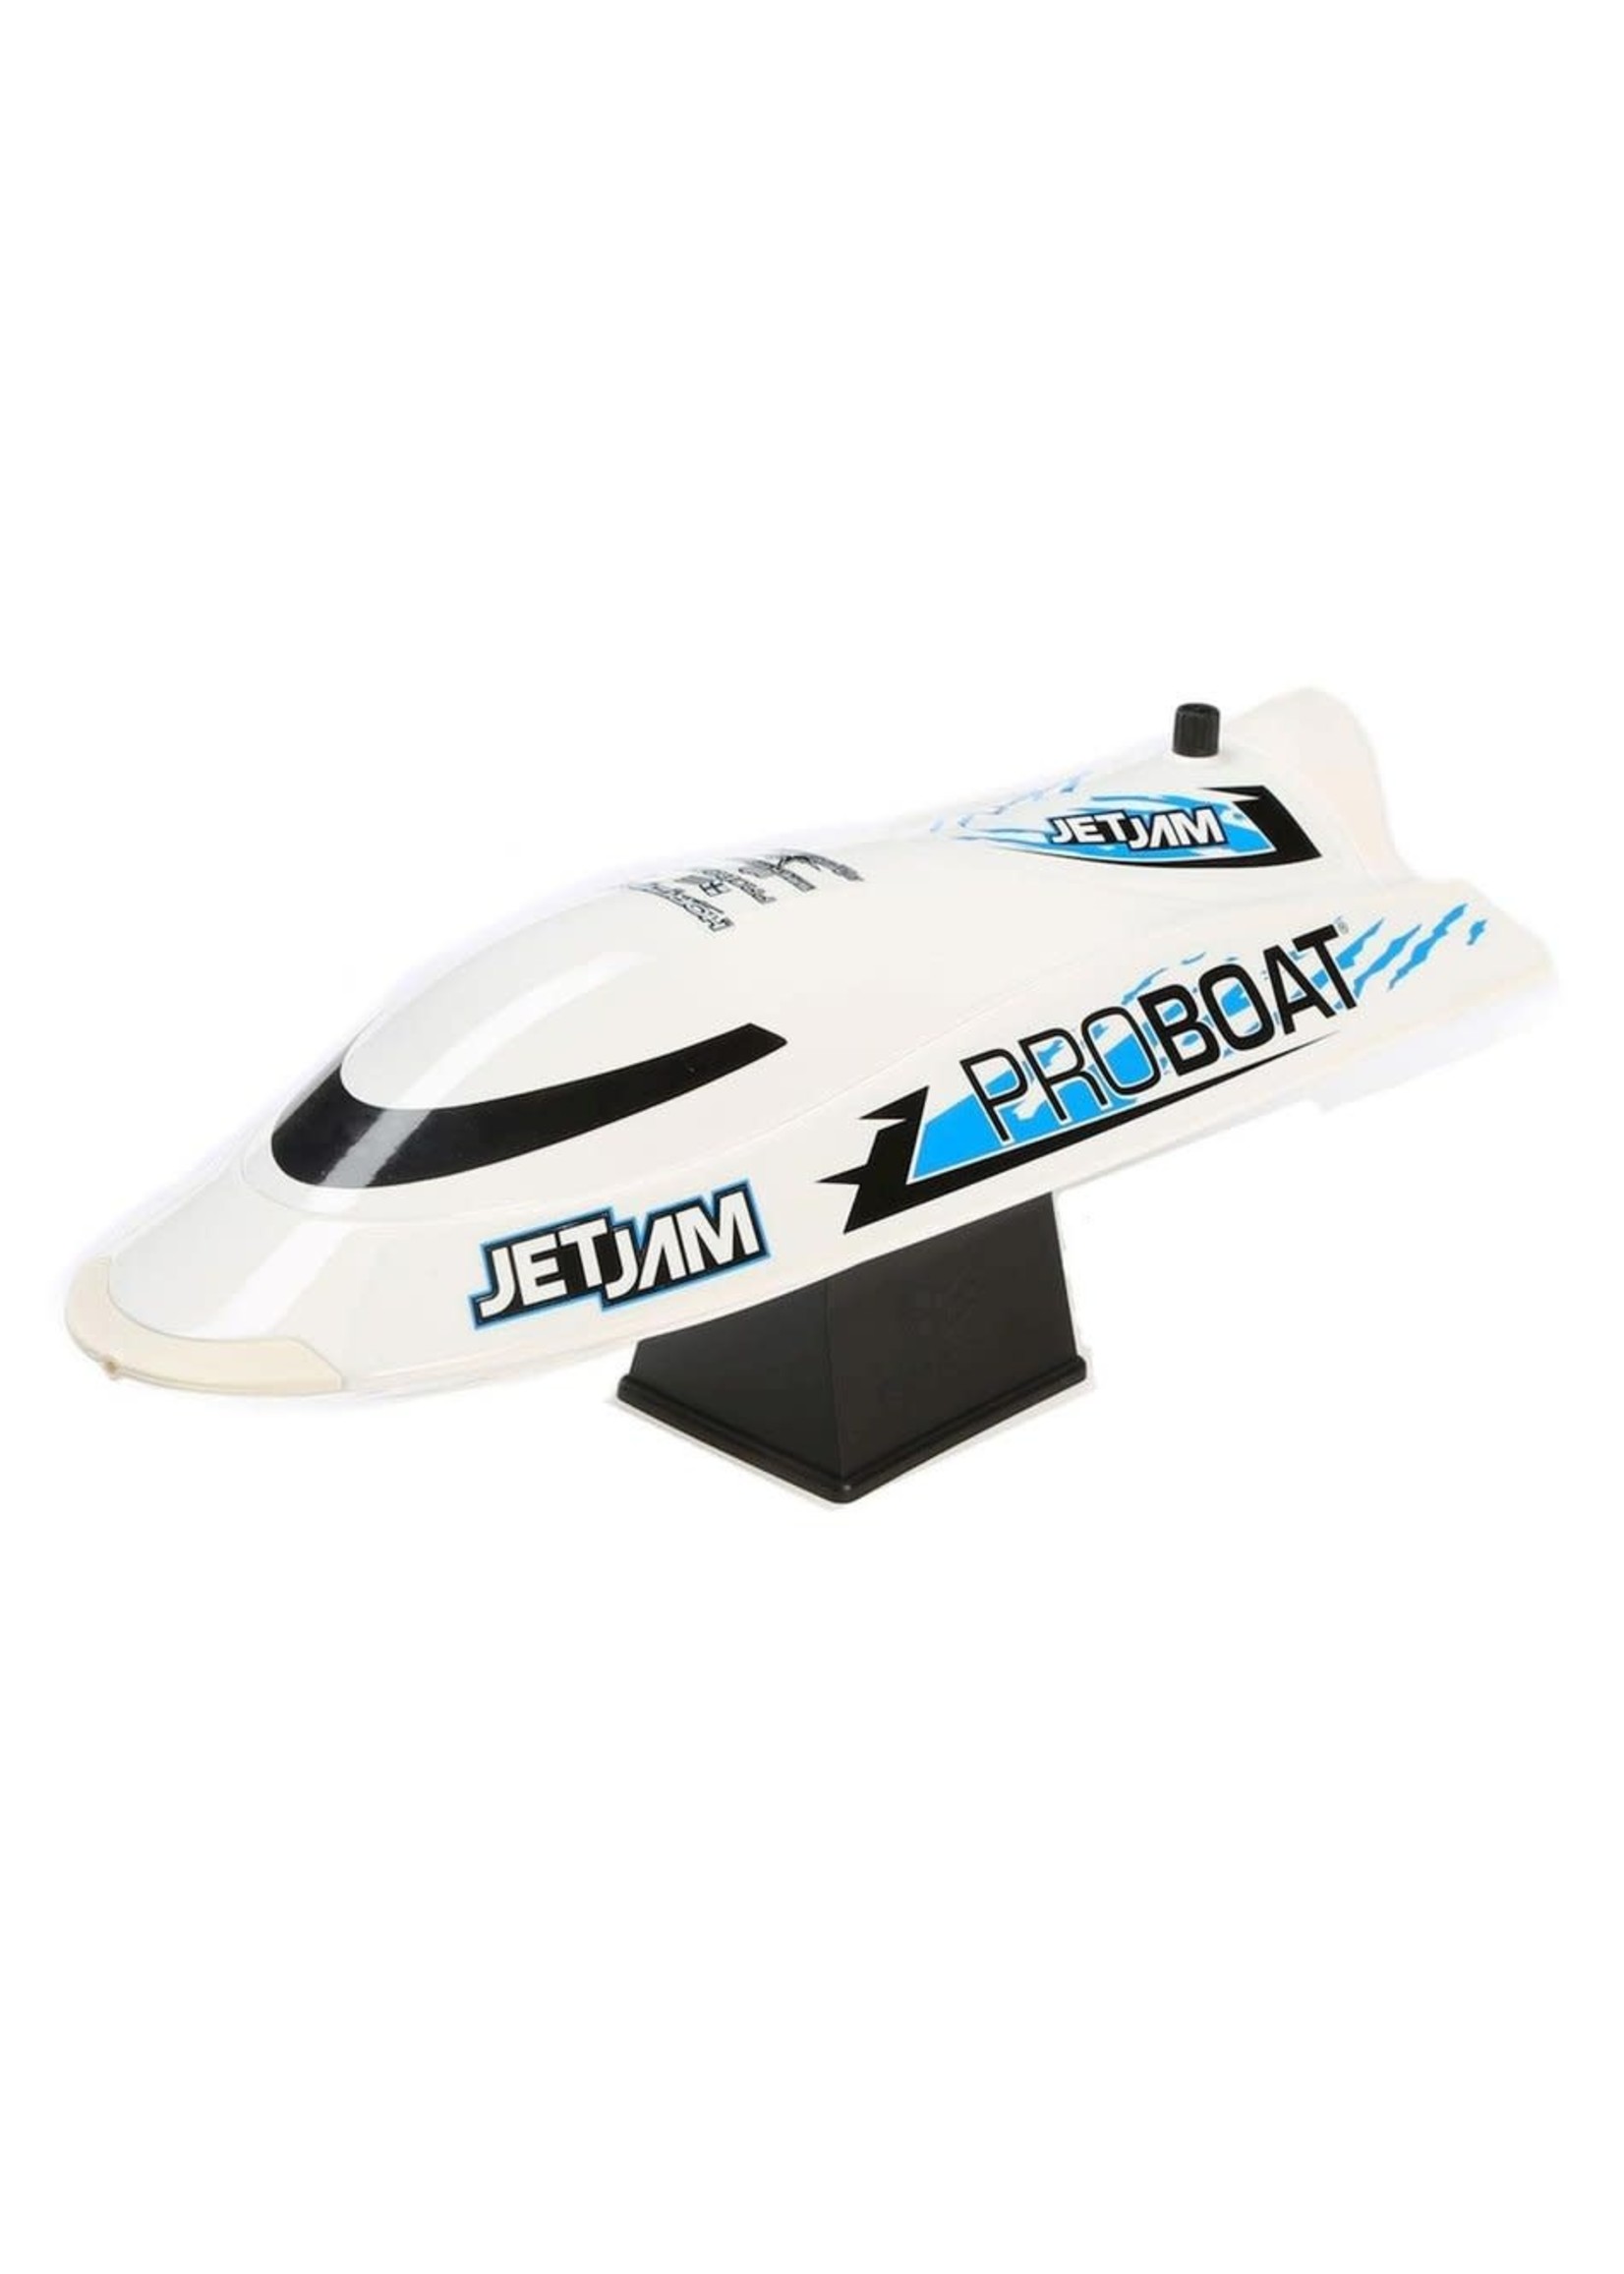 PRB PRB08031T2 Jet Jam 12-inch Pool Racer, White: RTR